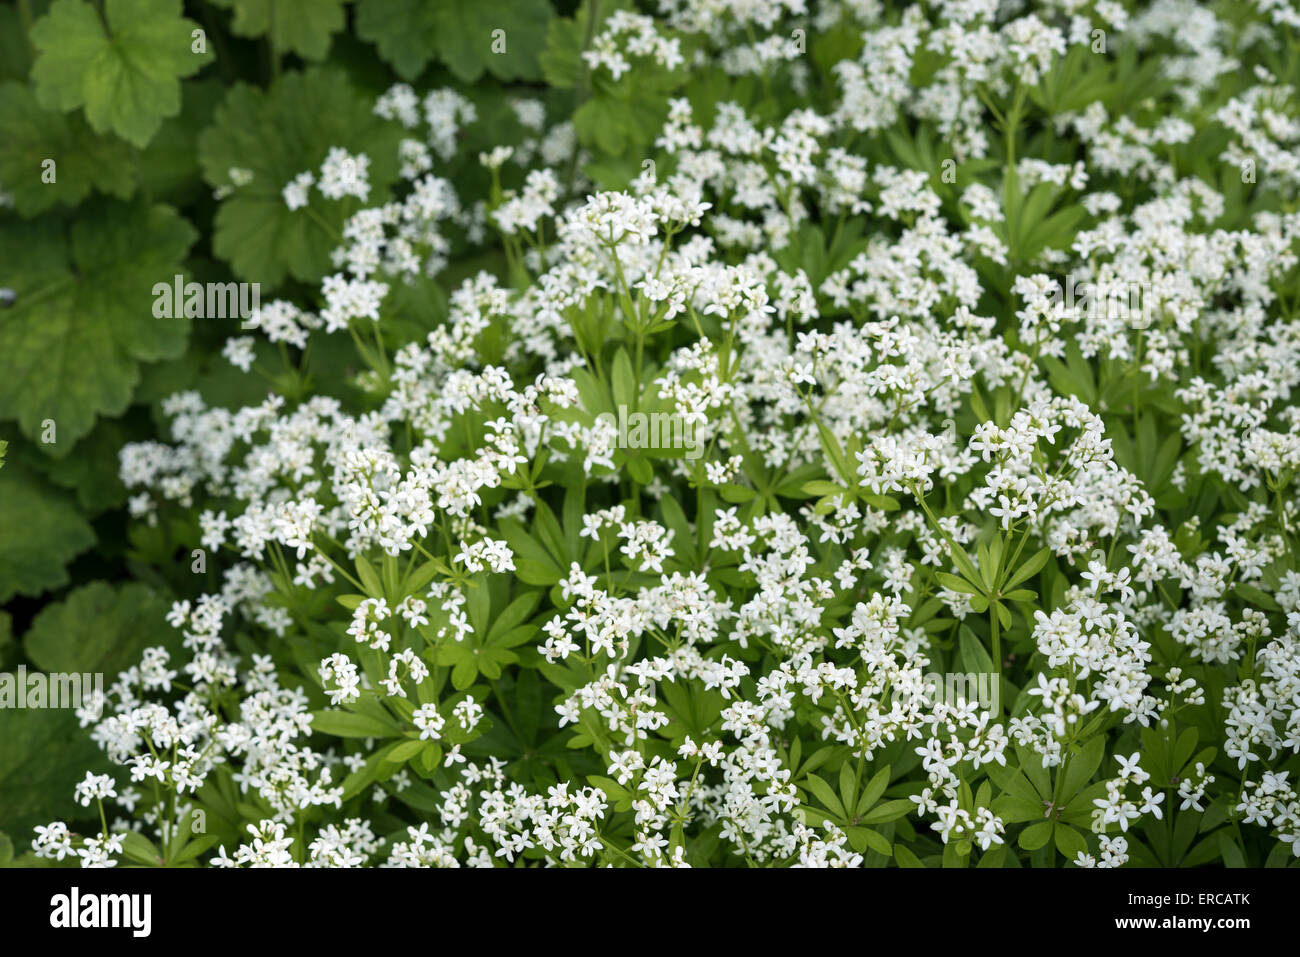 Galium Odoratum (Woodruff) with dainty white flowers in spring. A low growing wildflower often grown in gardens. Stock Photo